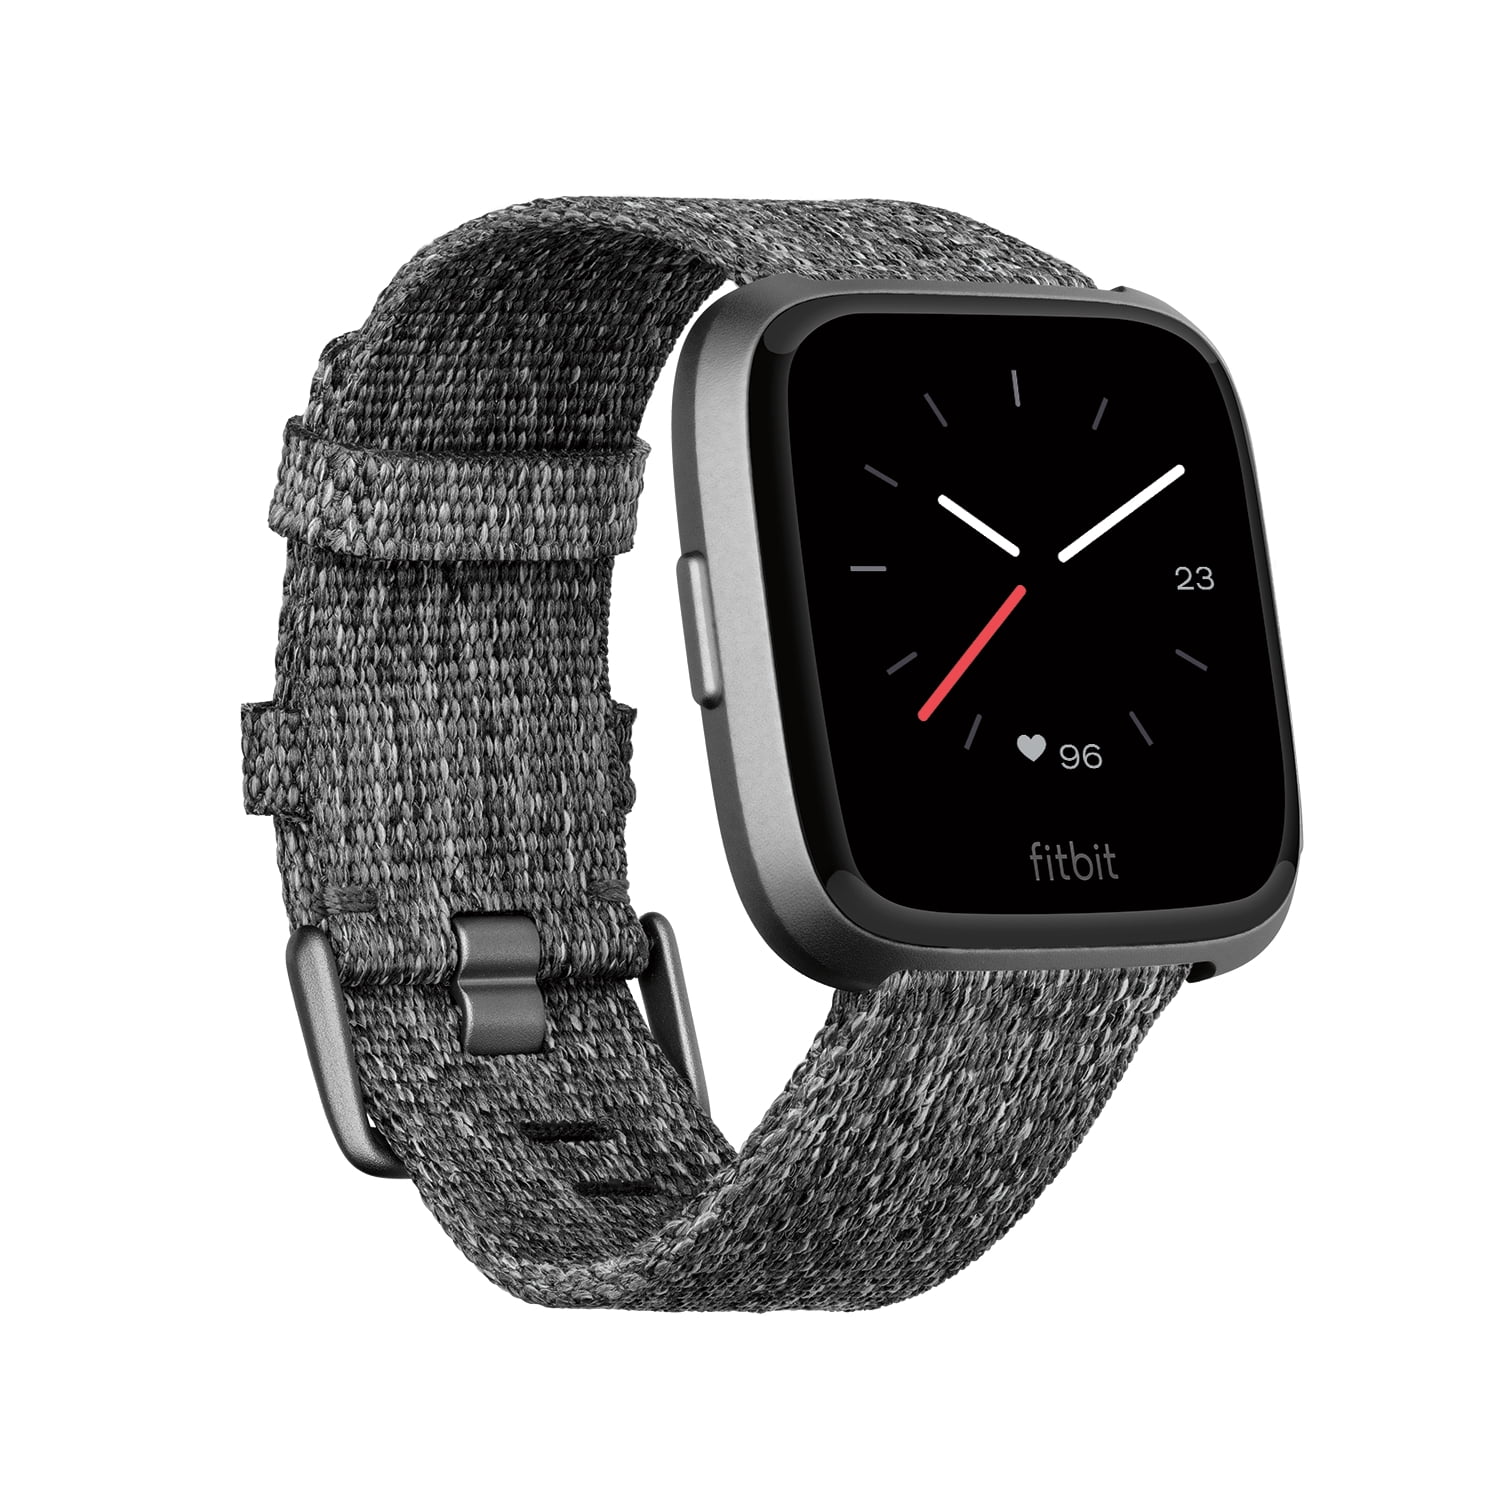 Fitbit Versa - Special Edition Smart Watch